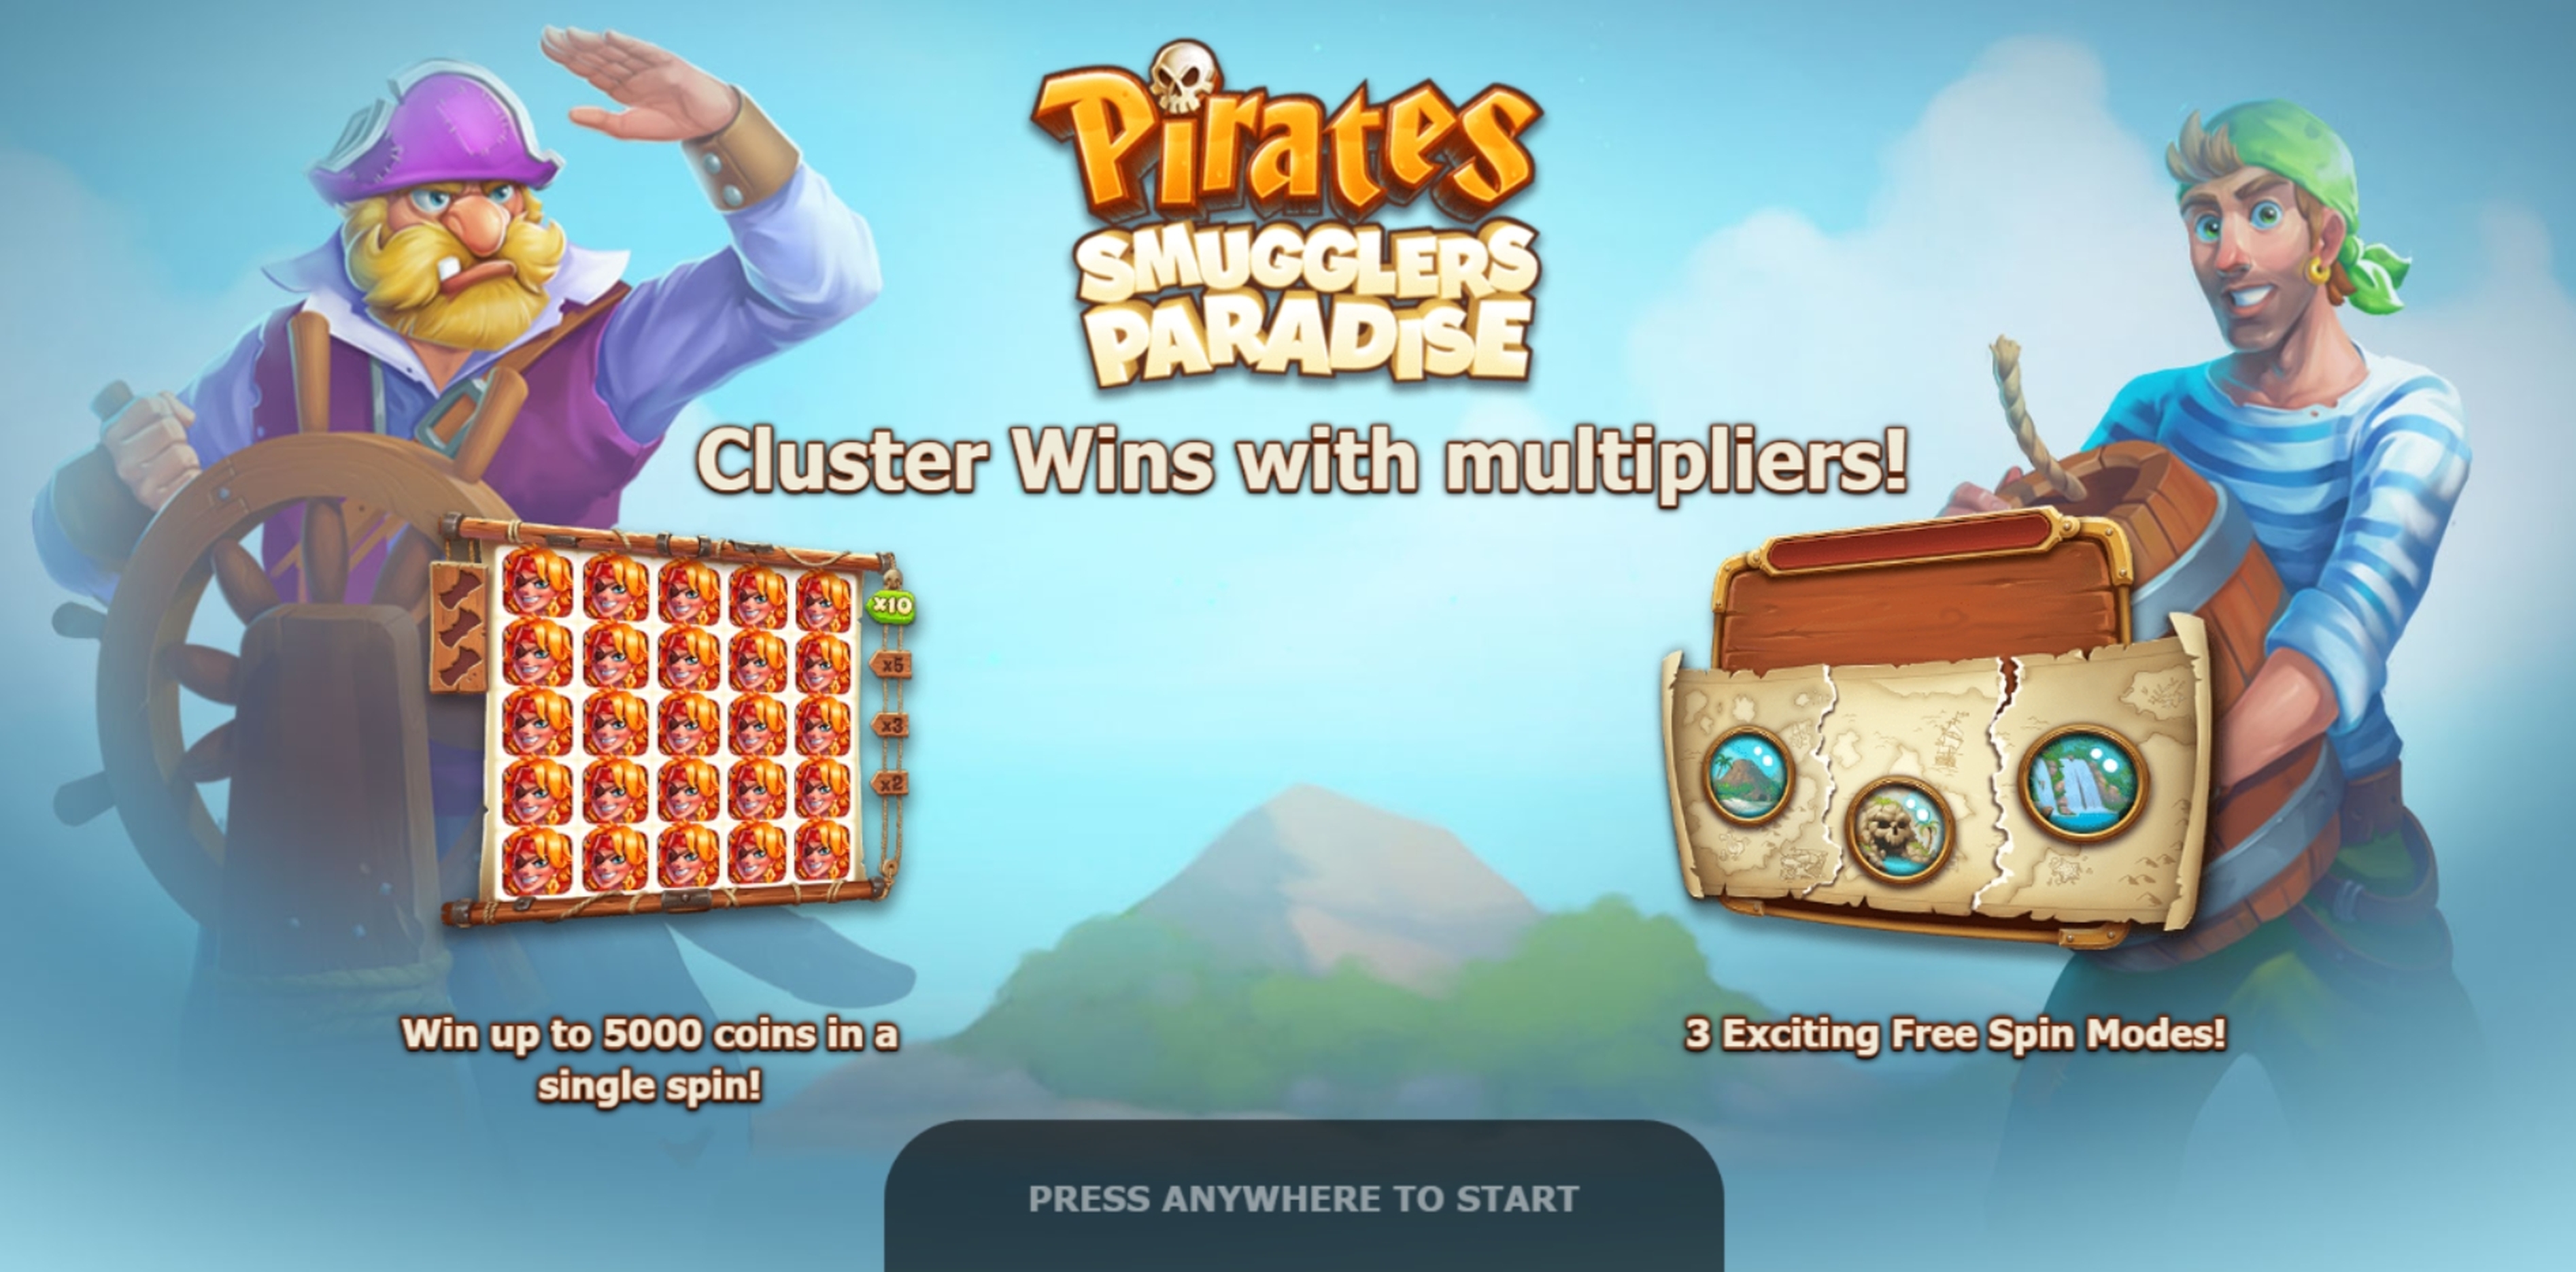 Play Pirates: Smugglers Paradise Free Casino Slot Game by Yggdrasil Gaming